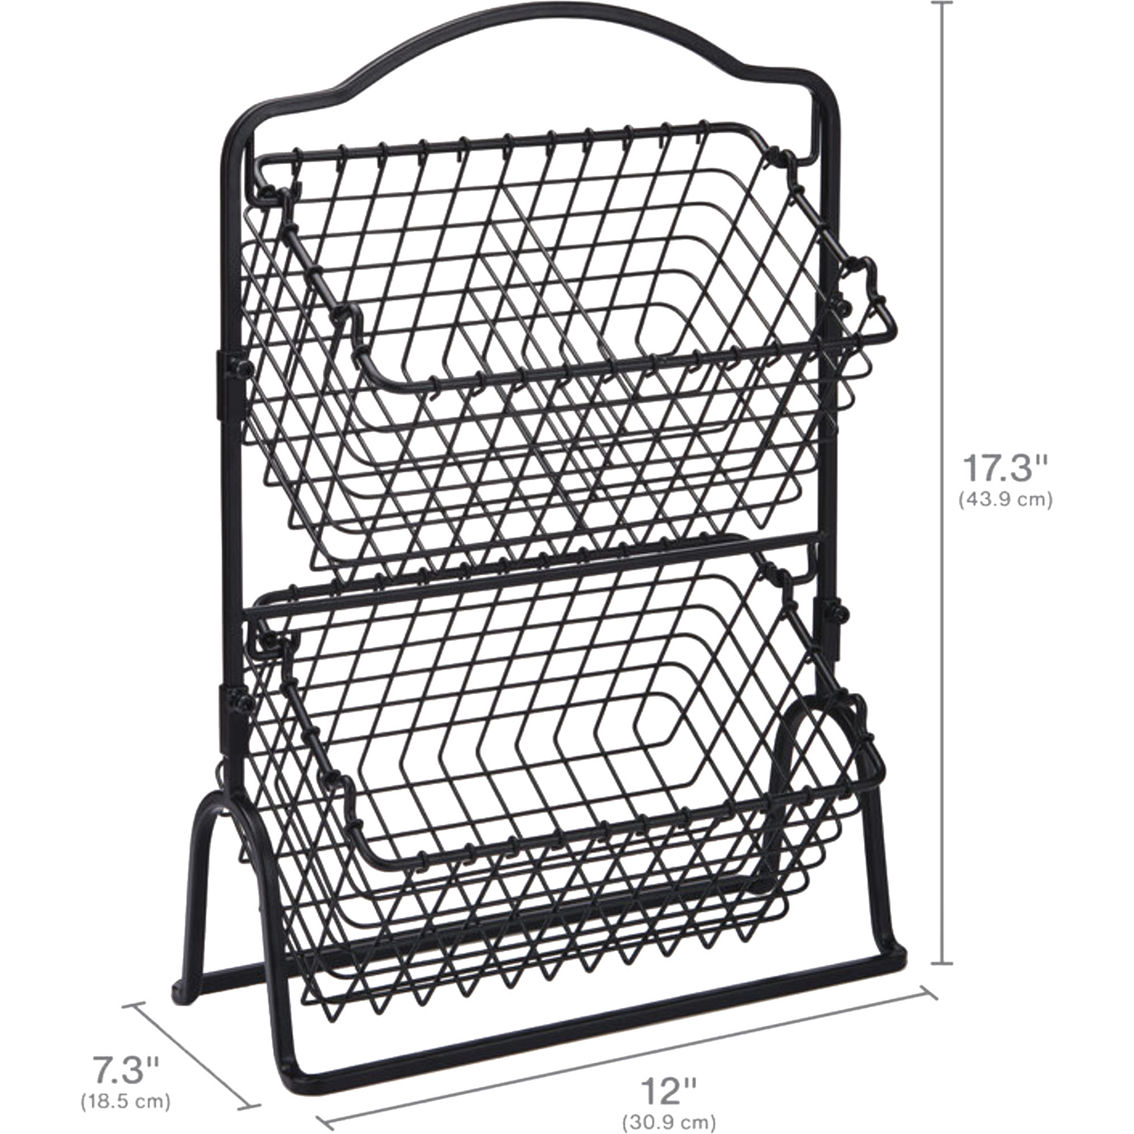 Mikasa Gourmet Basics Grid 2 Tier Basket - Image 5 of 5